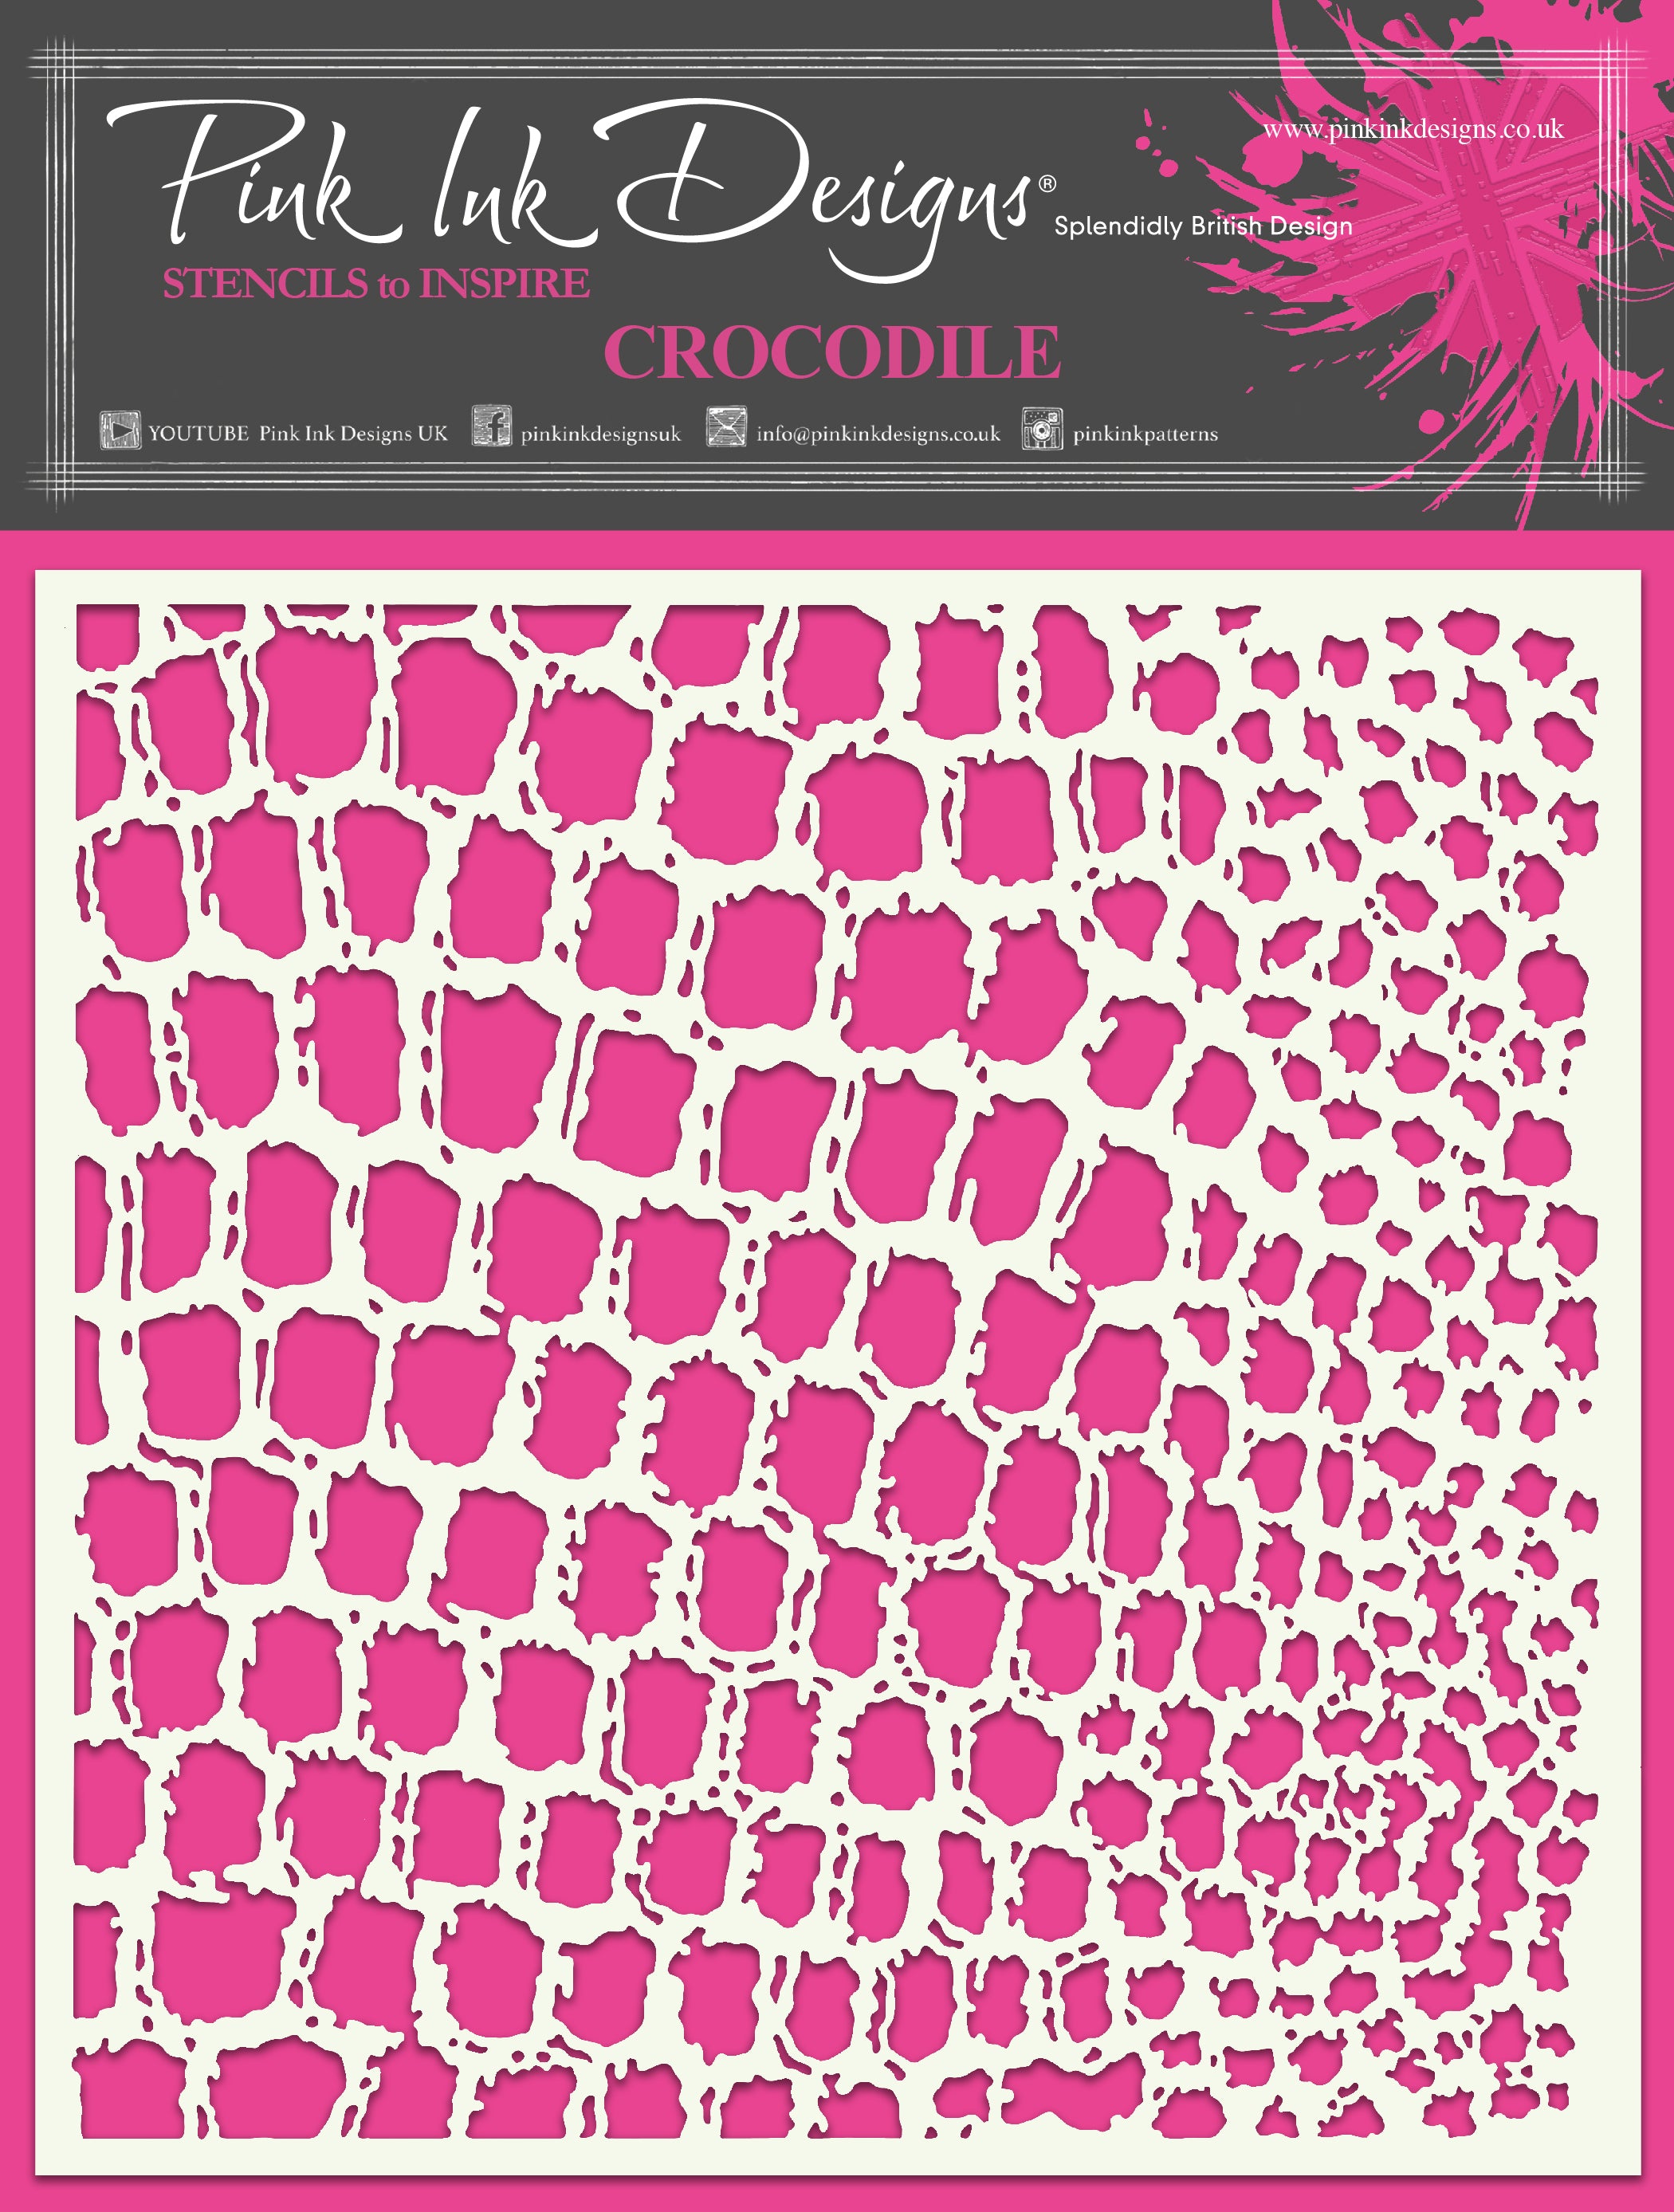 Pink Ink Designs Crocodile 7 in x 7 in Stencil